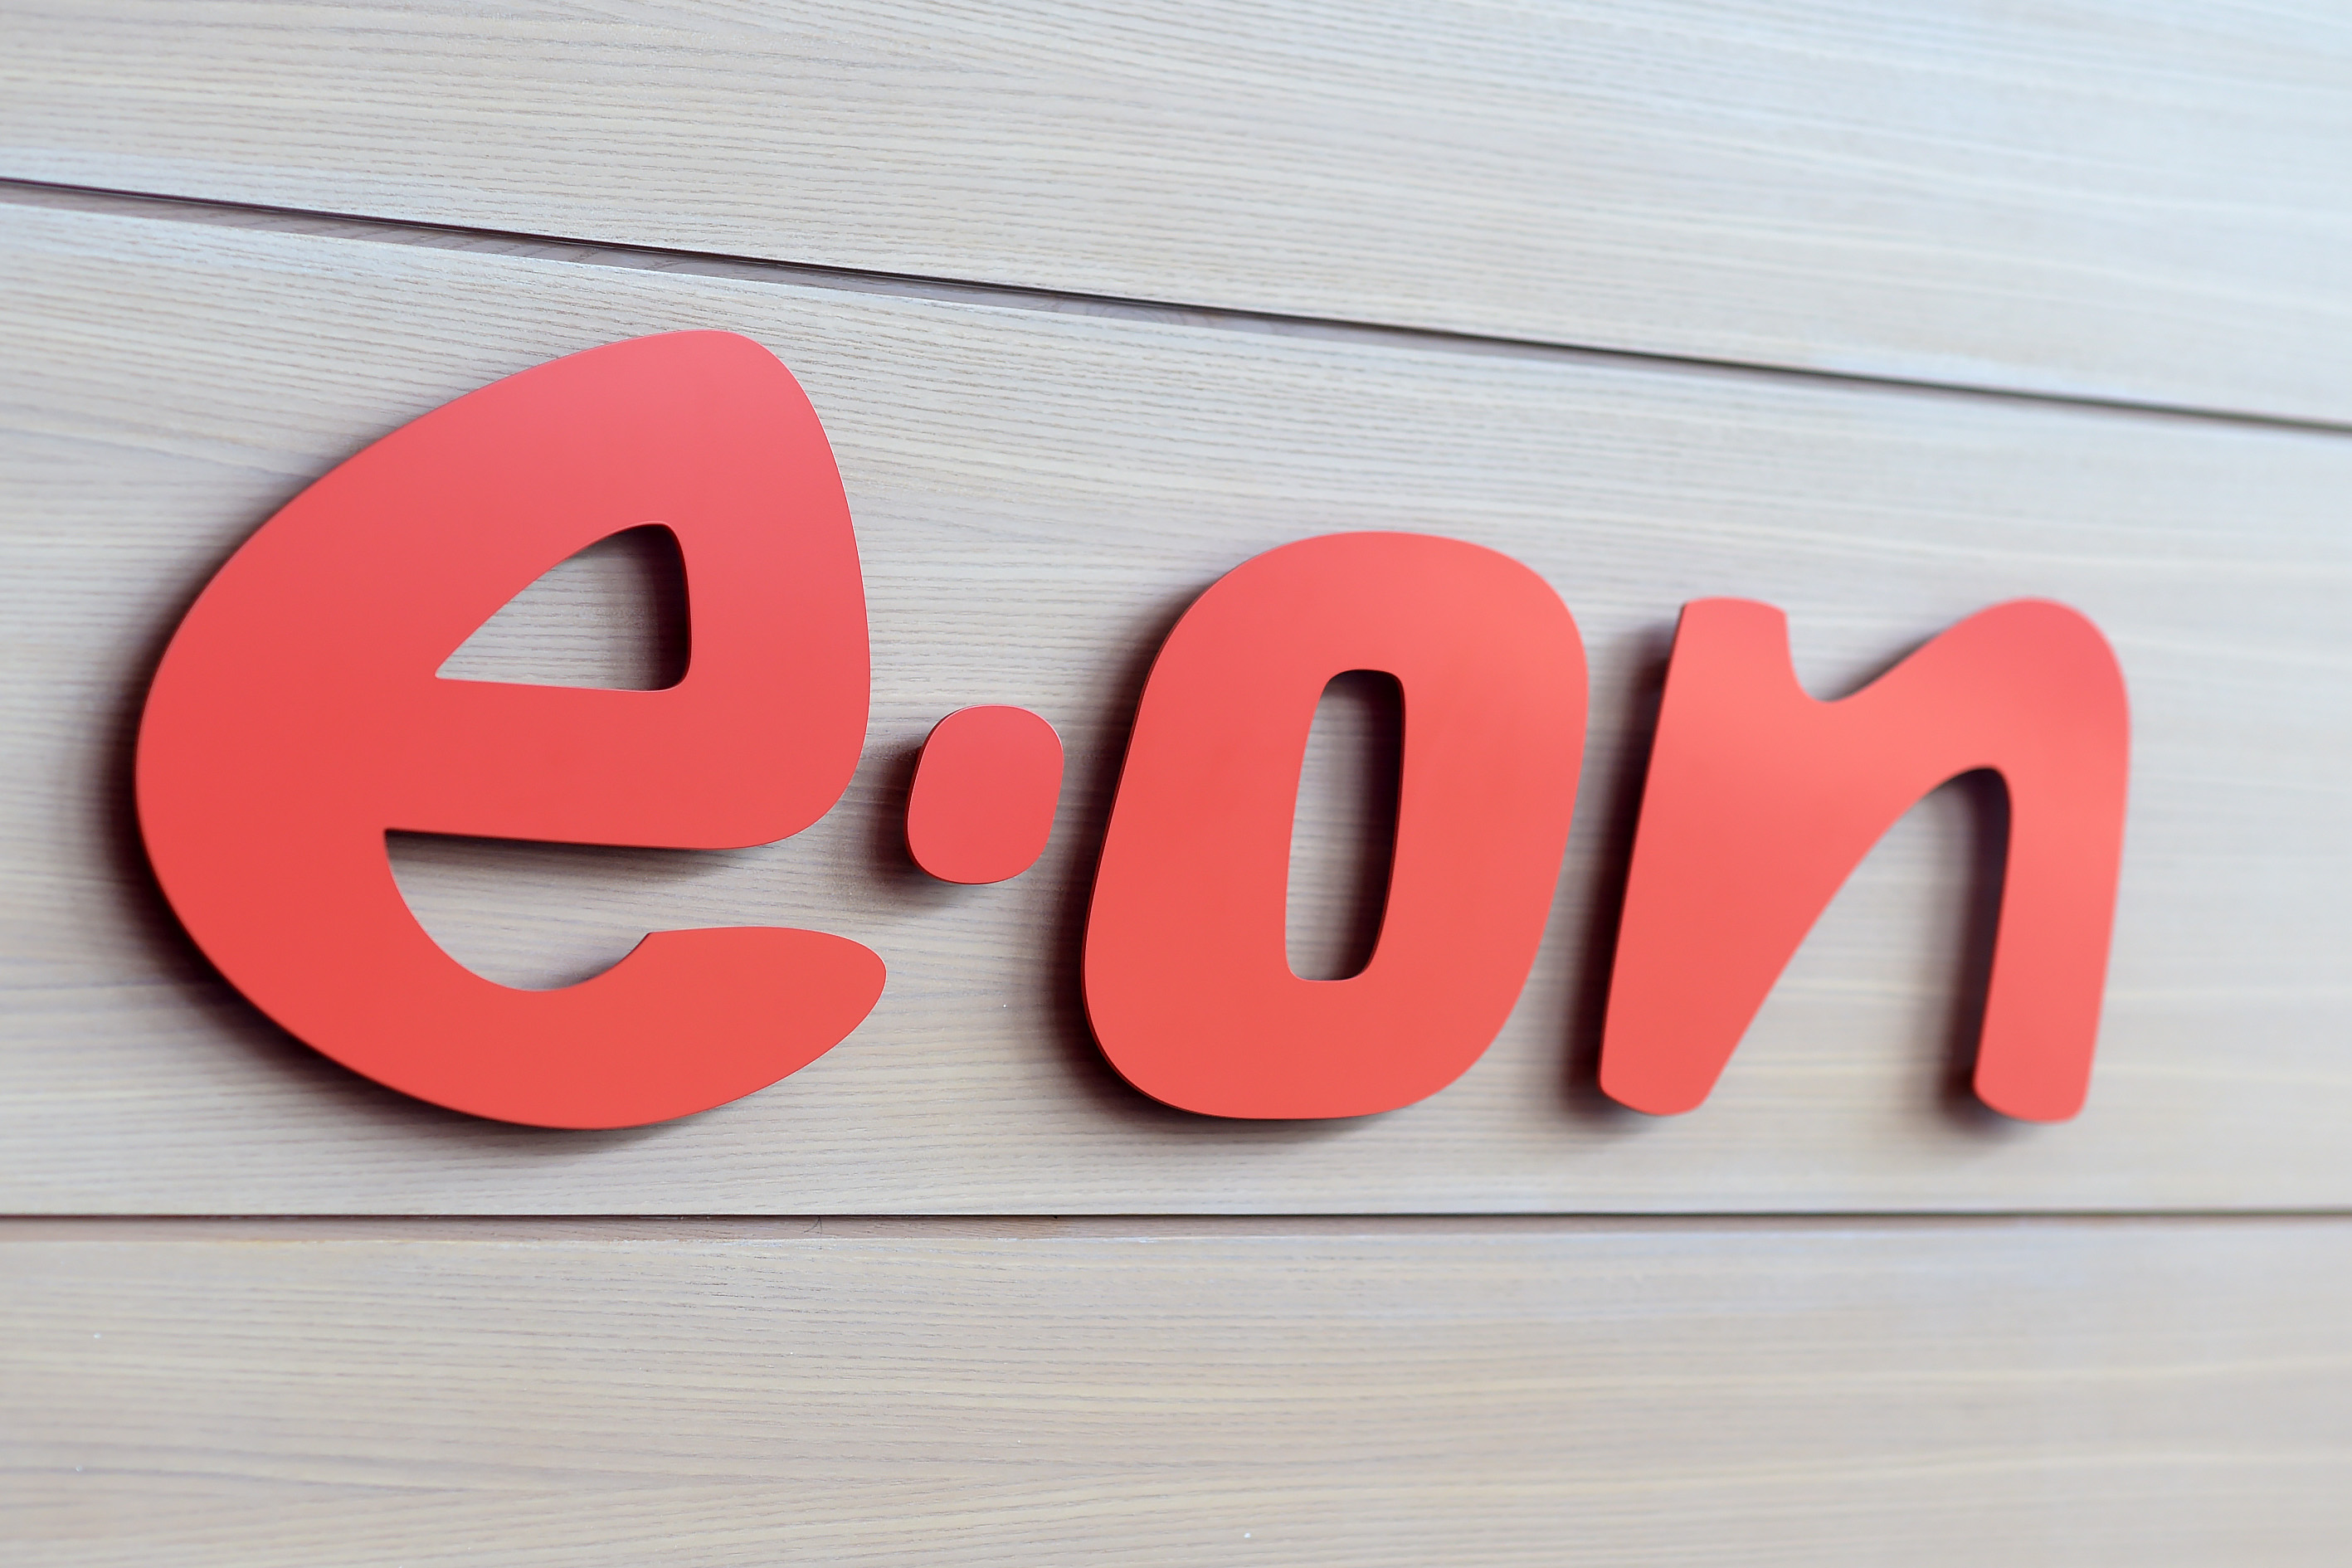 eon-logo-01